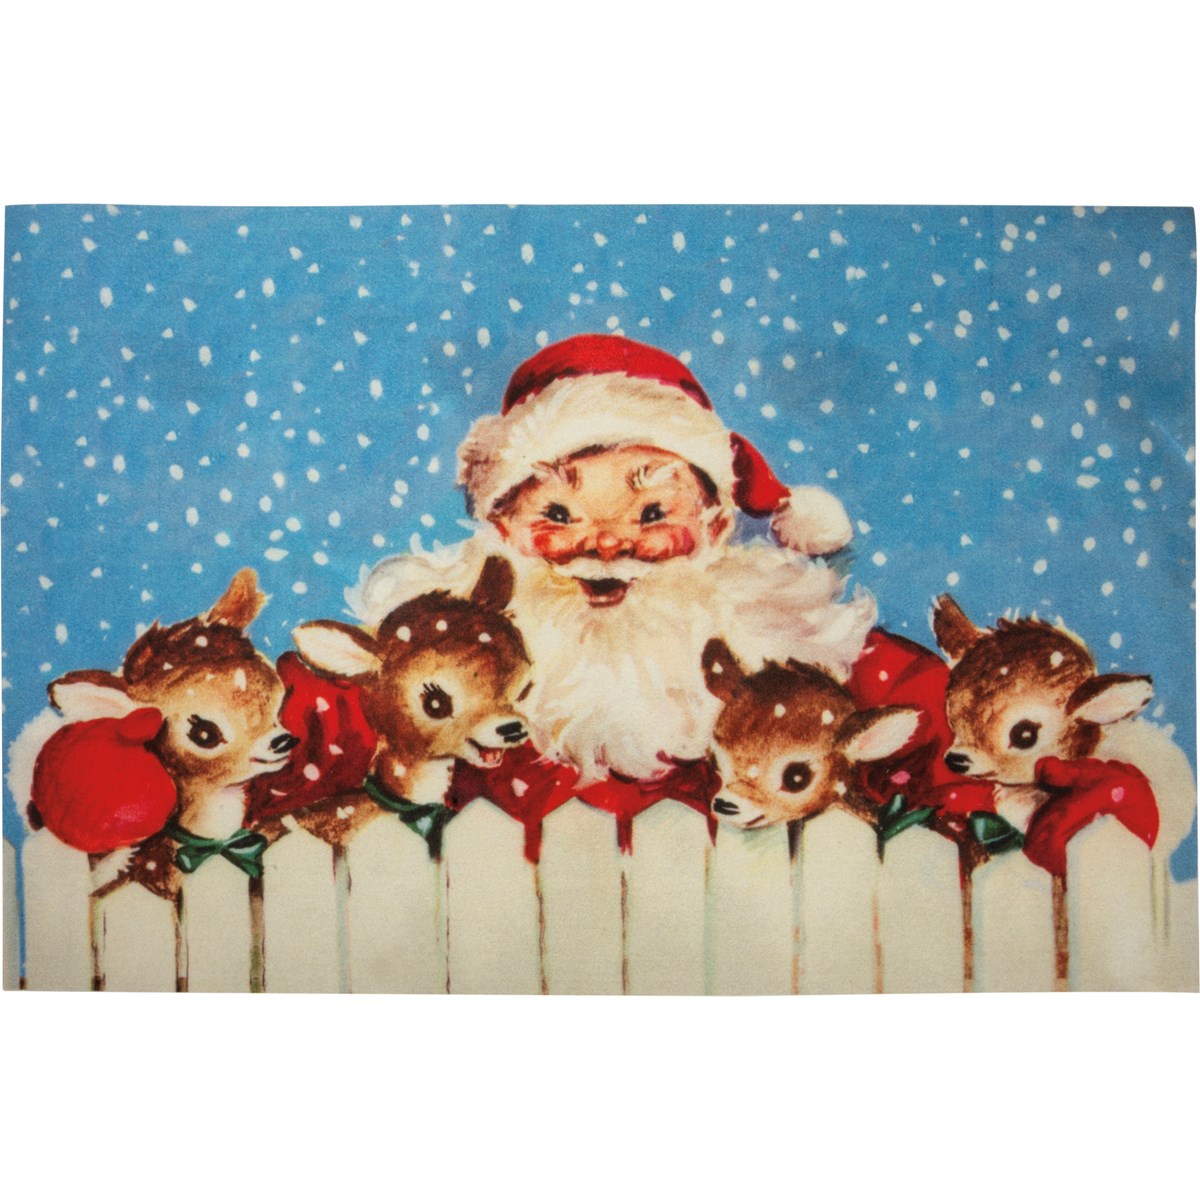 Santa And Reindeer Rug - Polyester, PVC skid-resistant backing